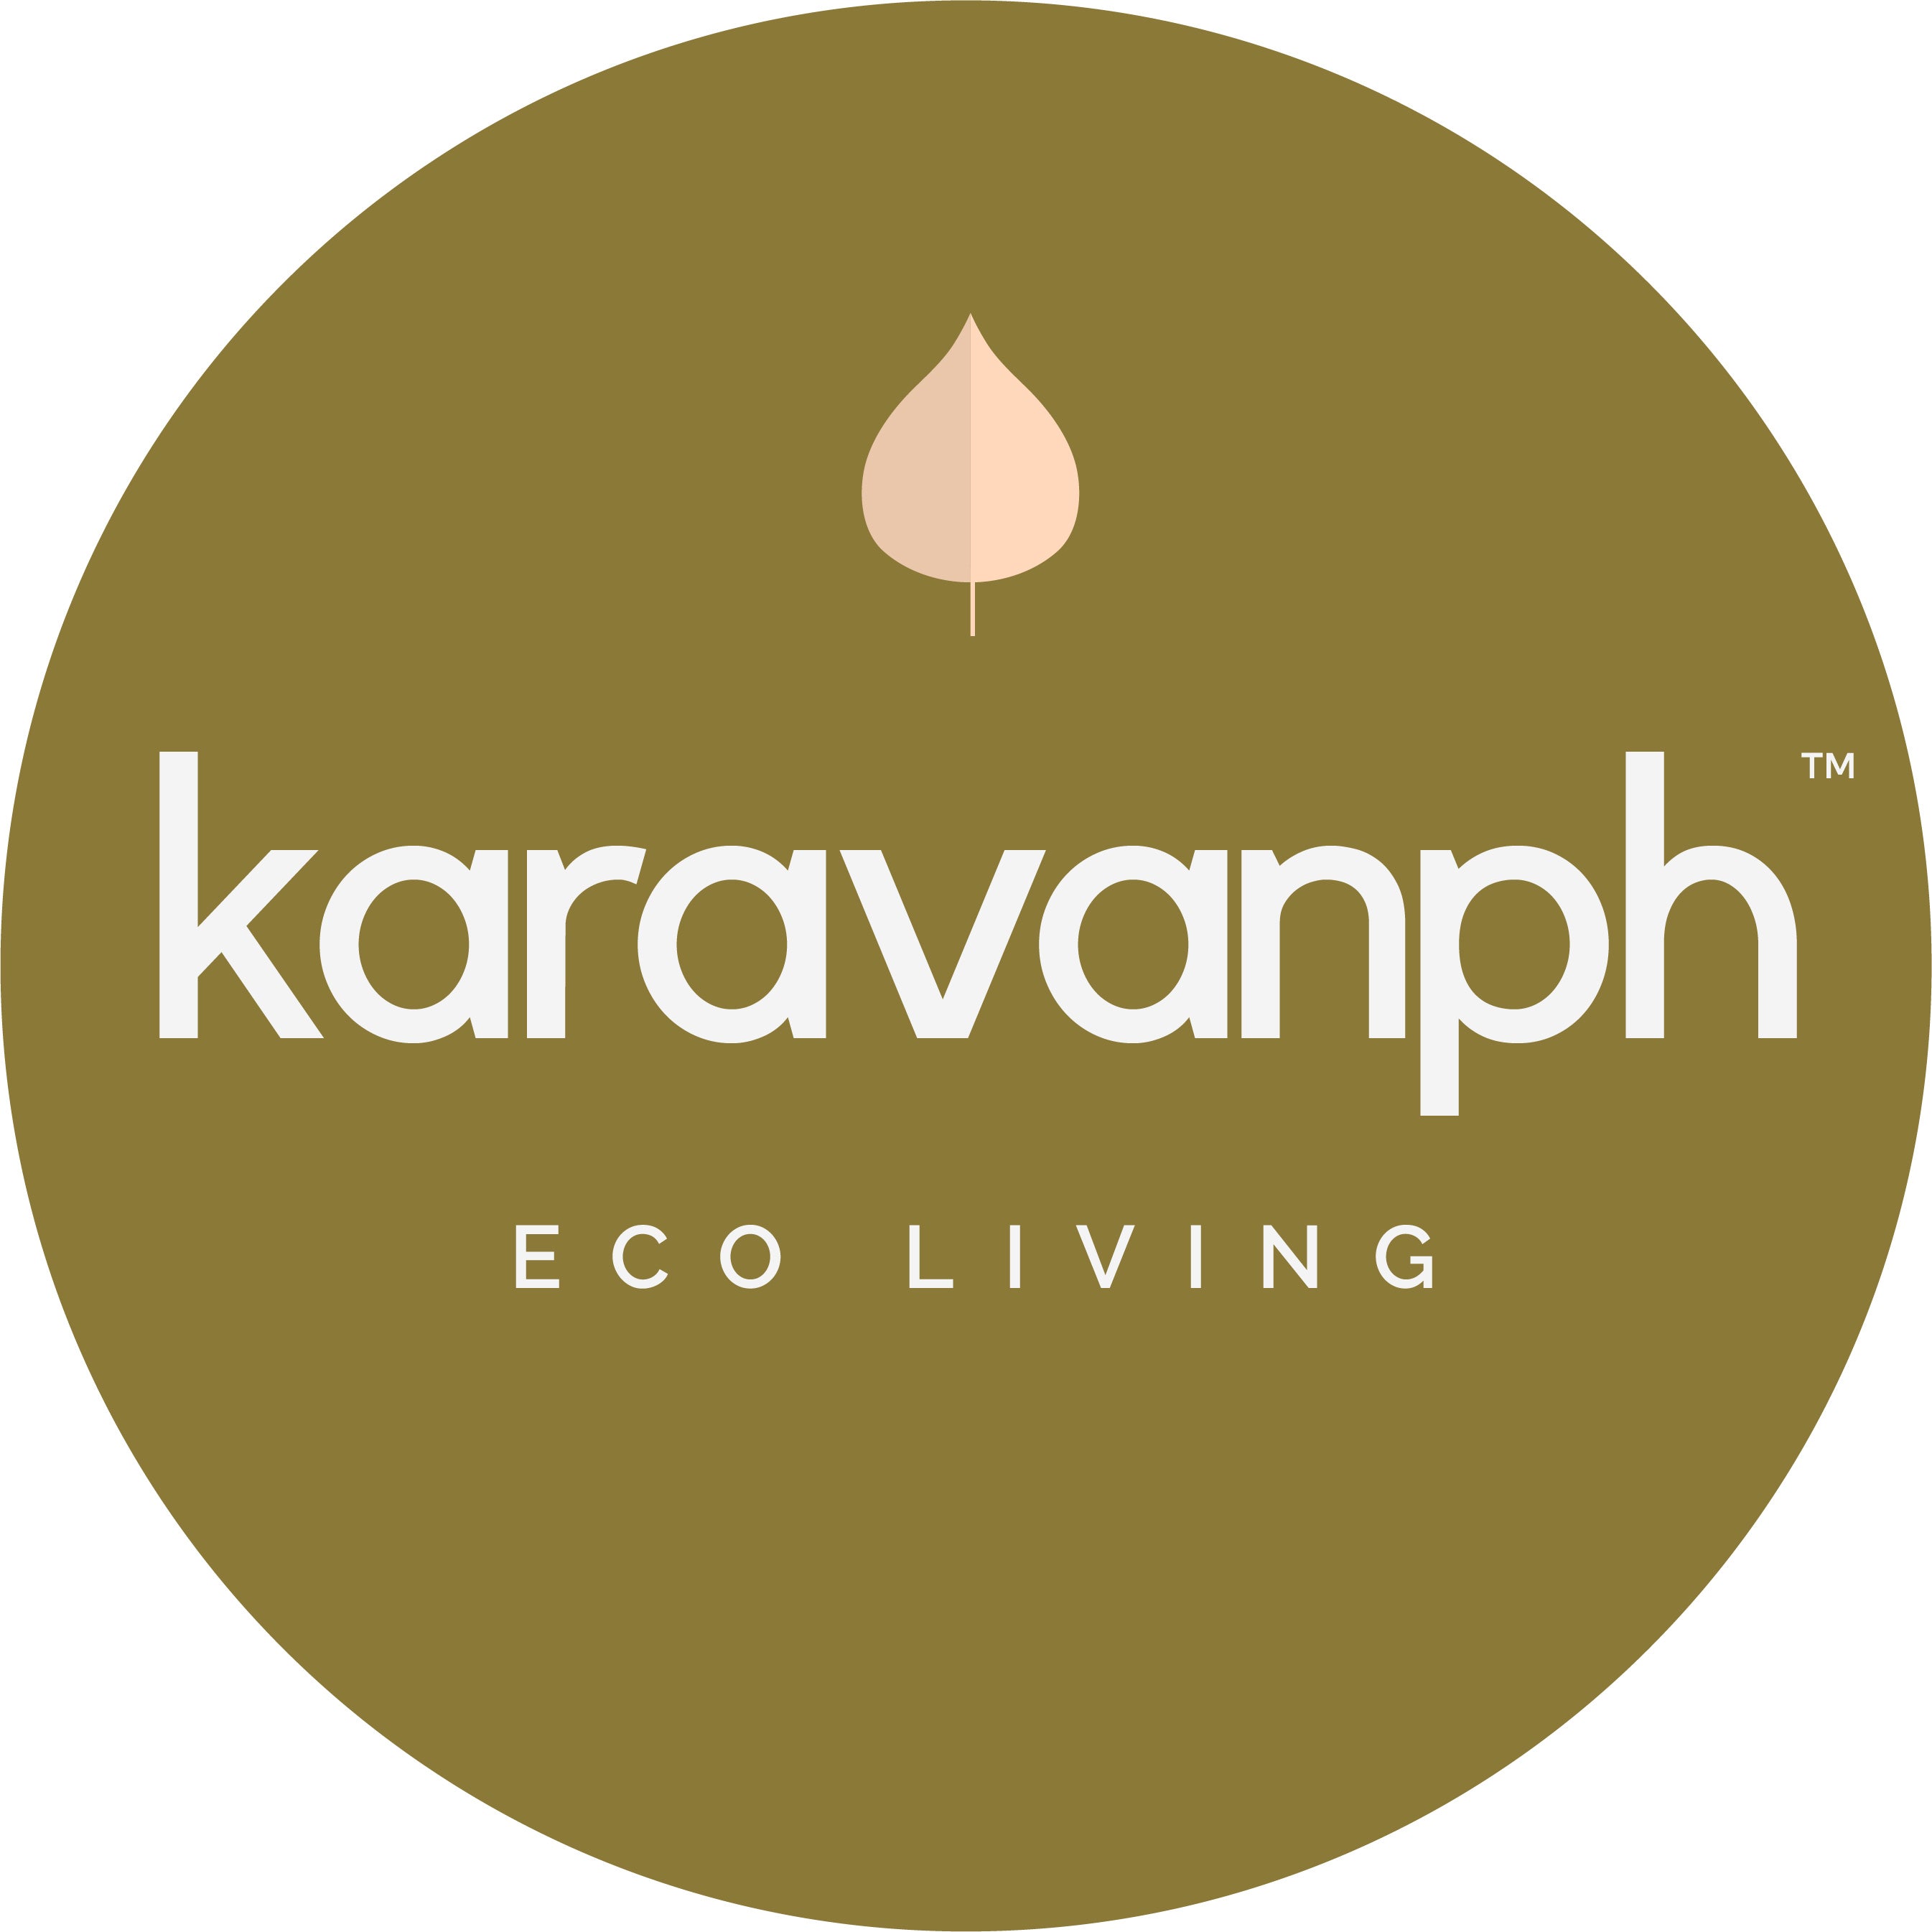 ShopKaravan by KaravanPH